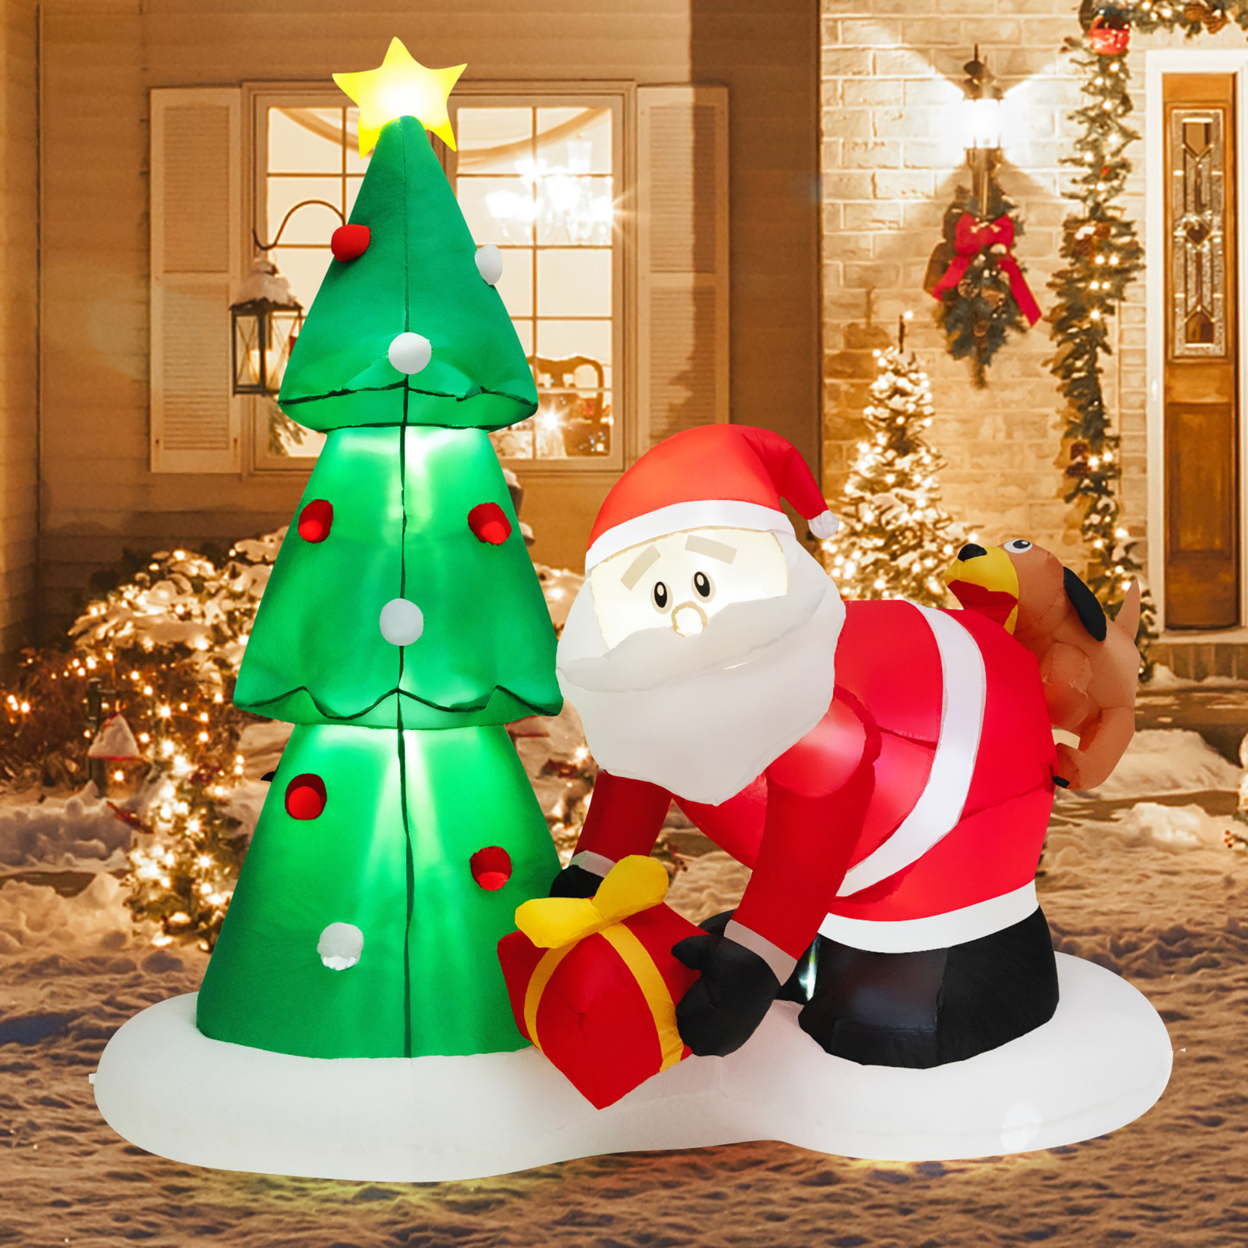 7FT Christmas Inflatable Tree & Santa Claus Yard Decor W/ Air Blower & LED Lights